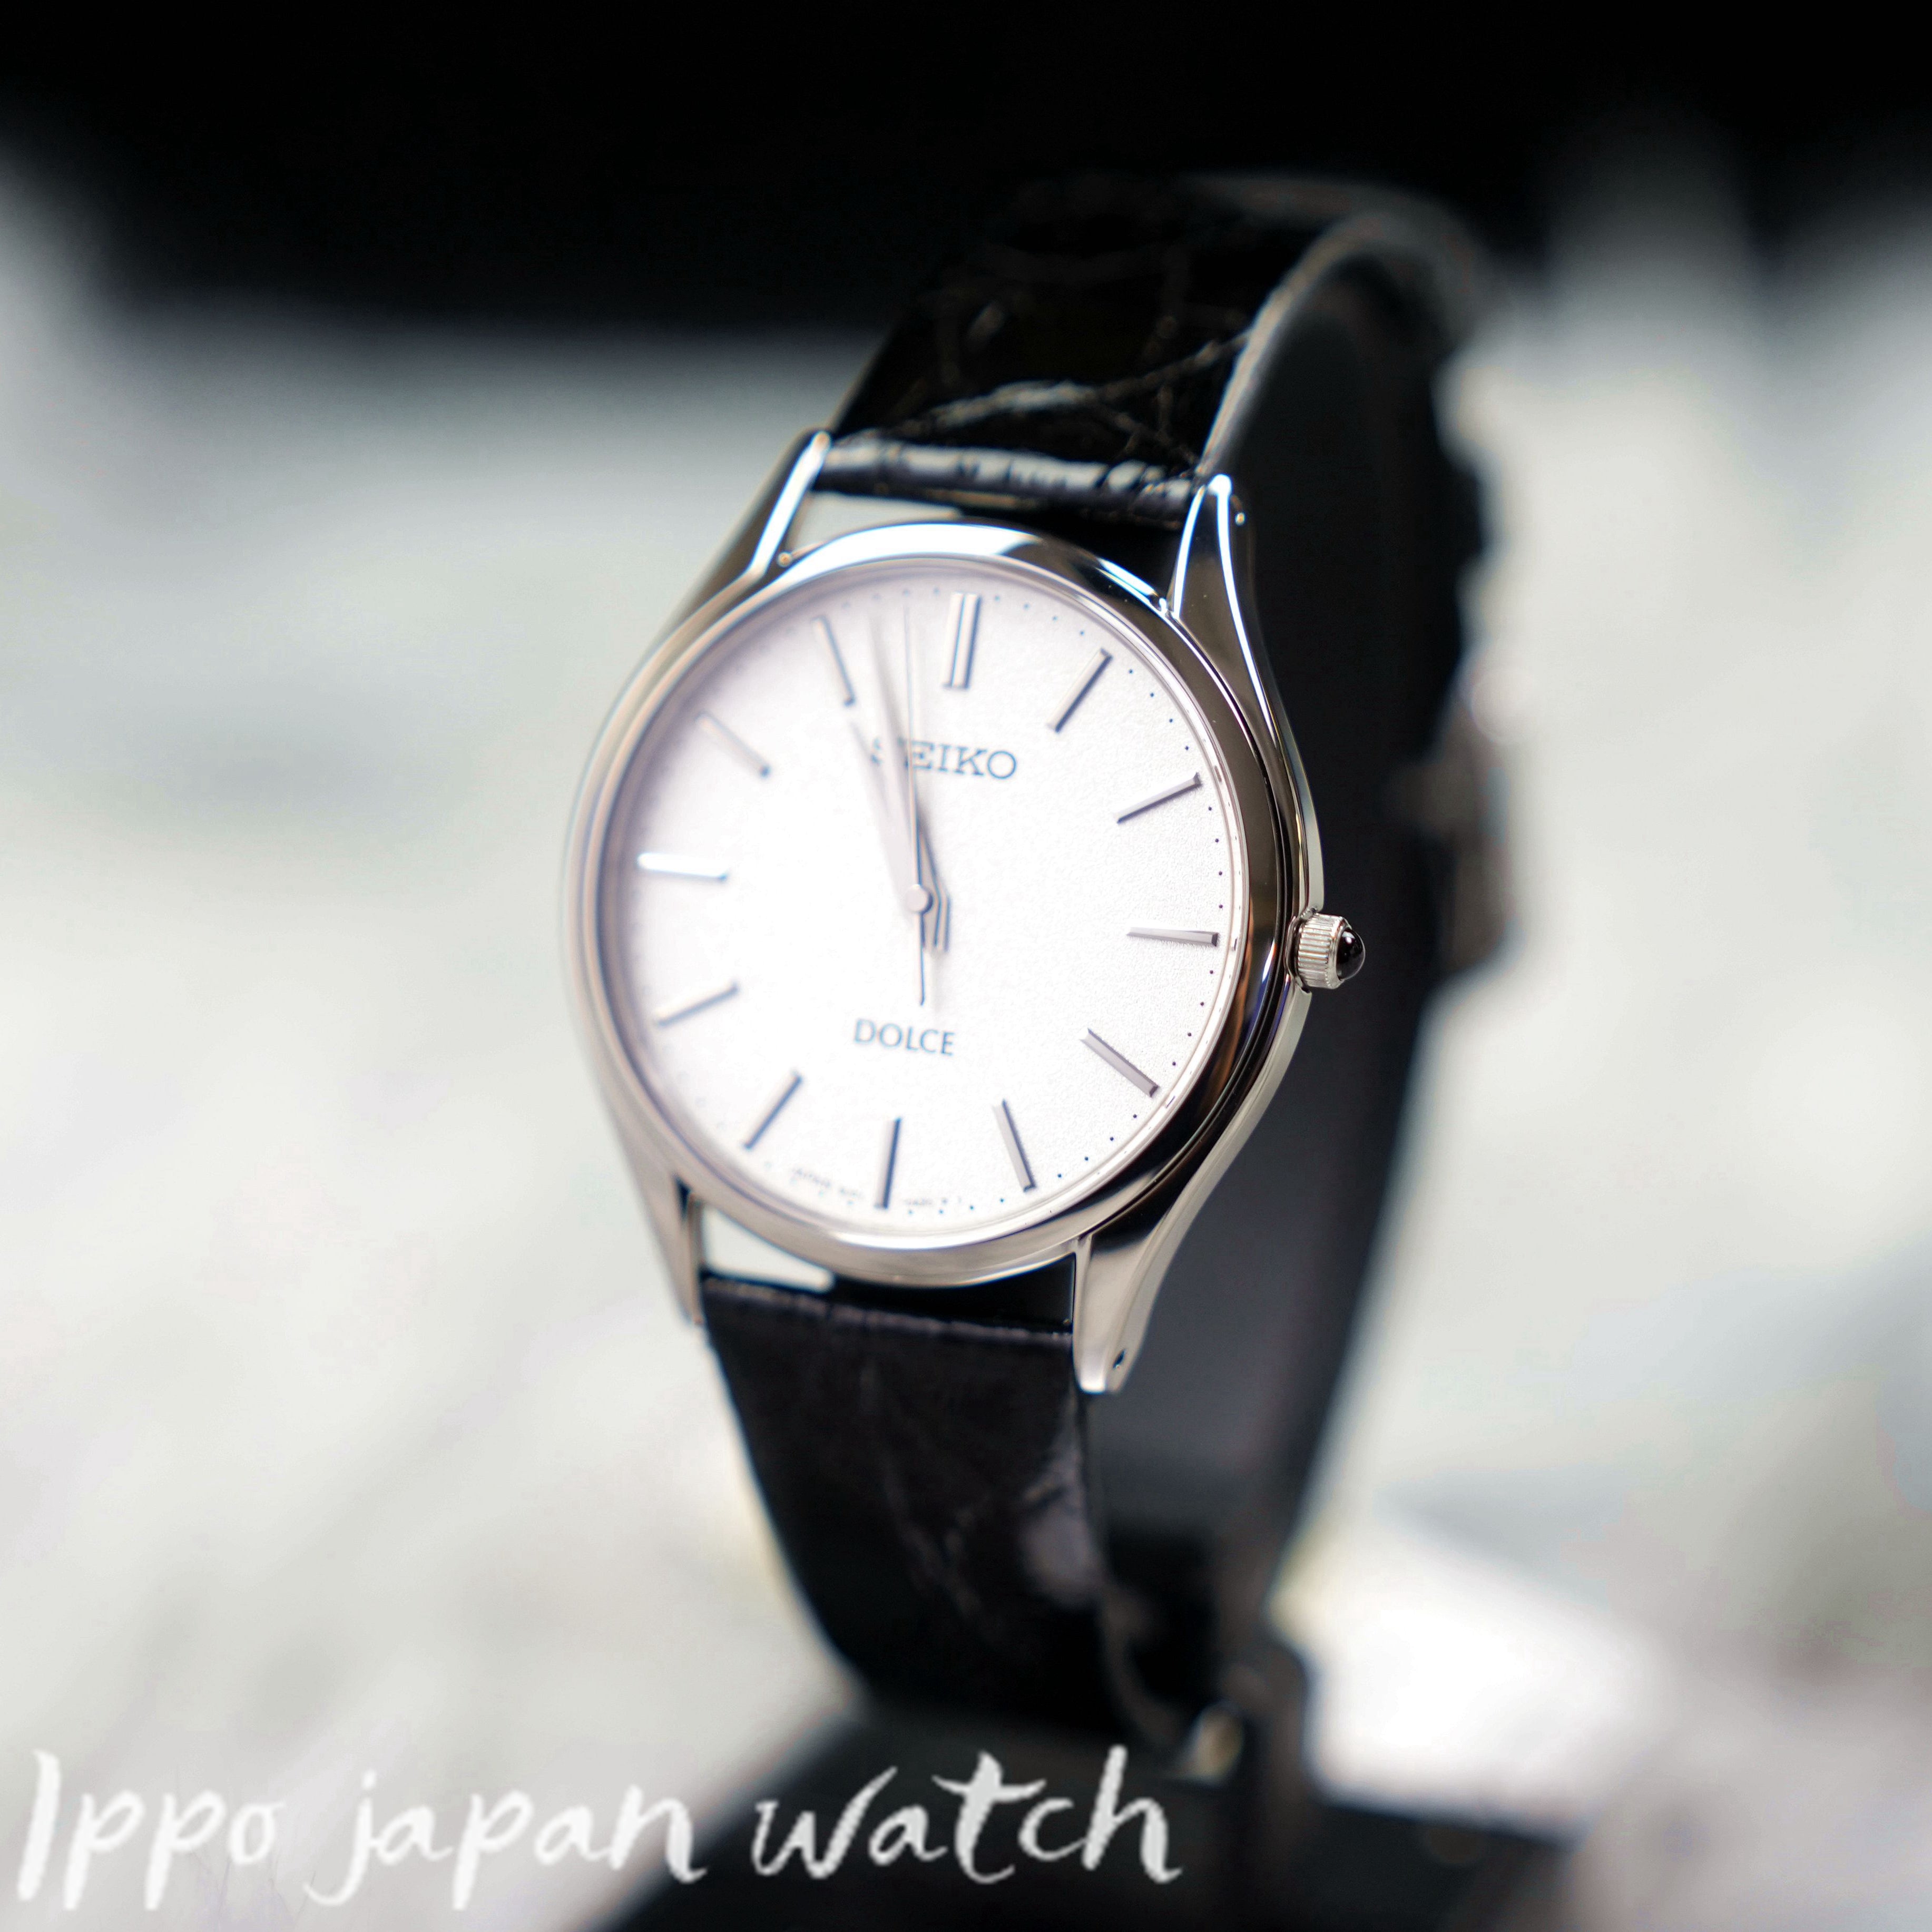 SEIKO Dolce & Exceline SACM171 Battery powered quartz watch - IPPO JAPAN WATCH 